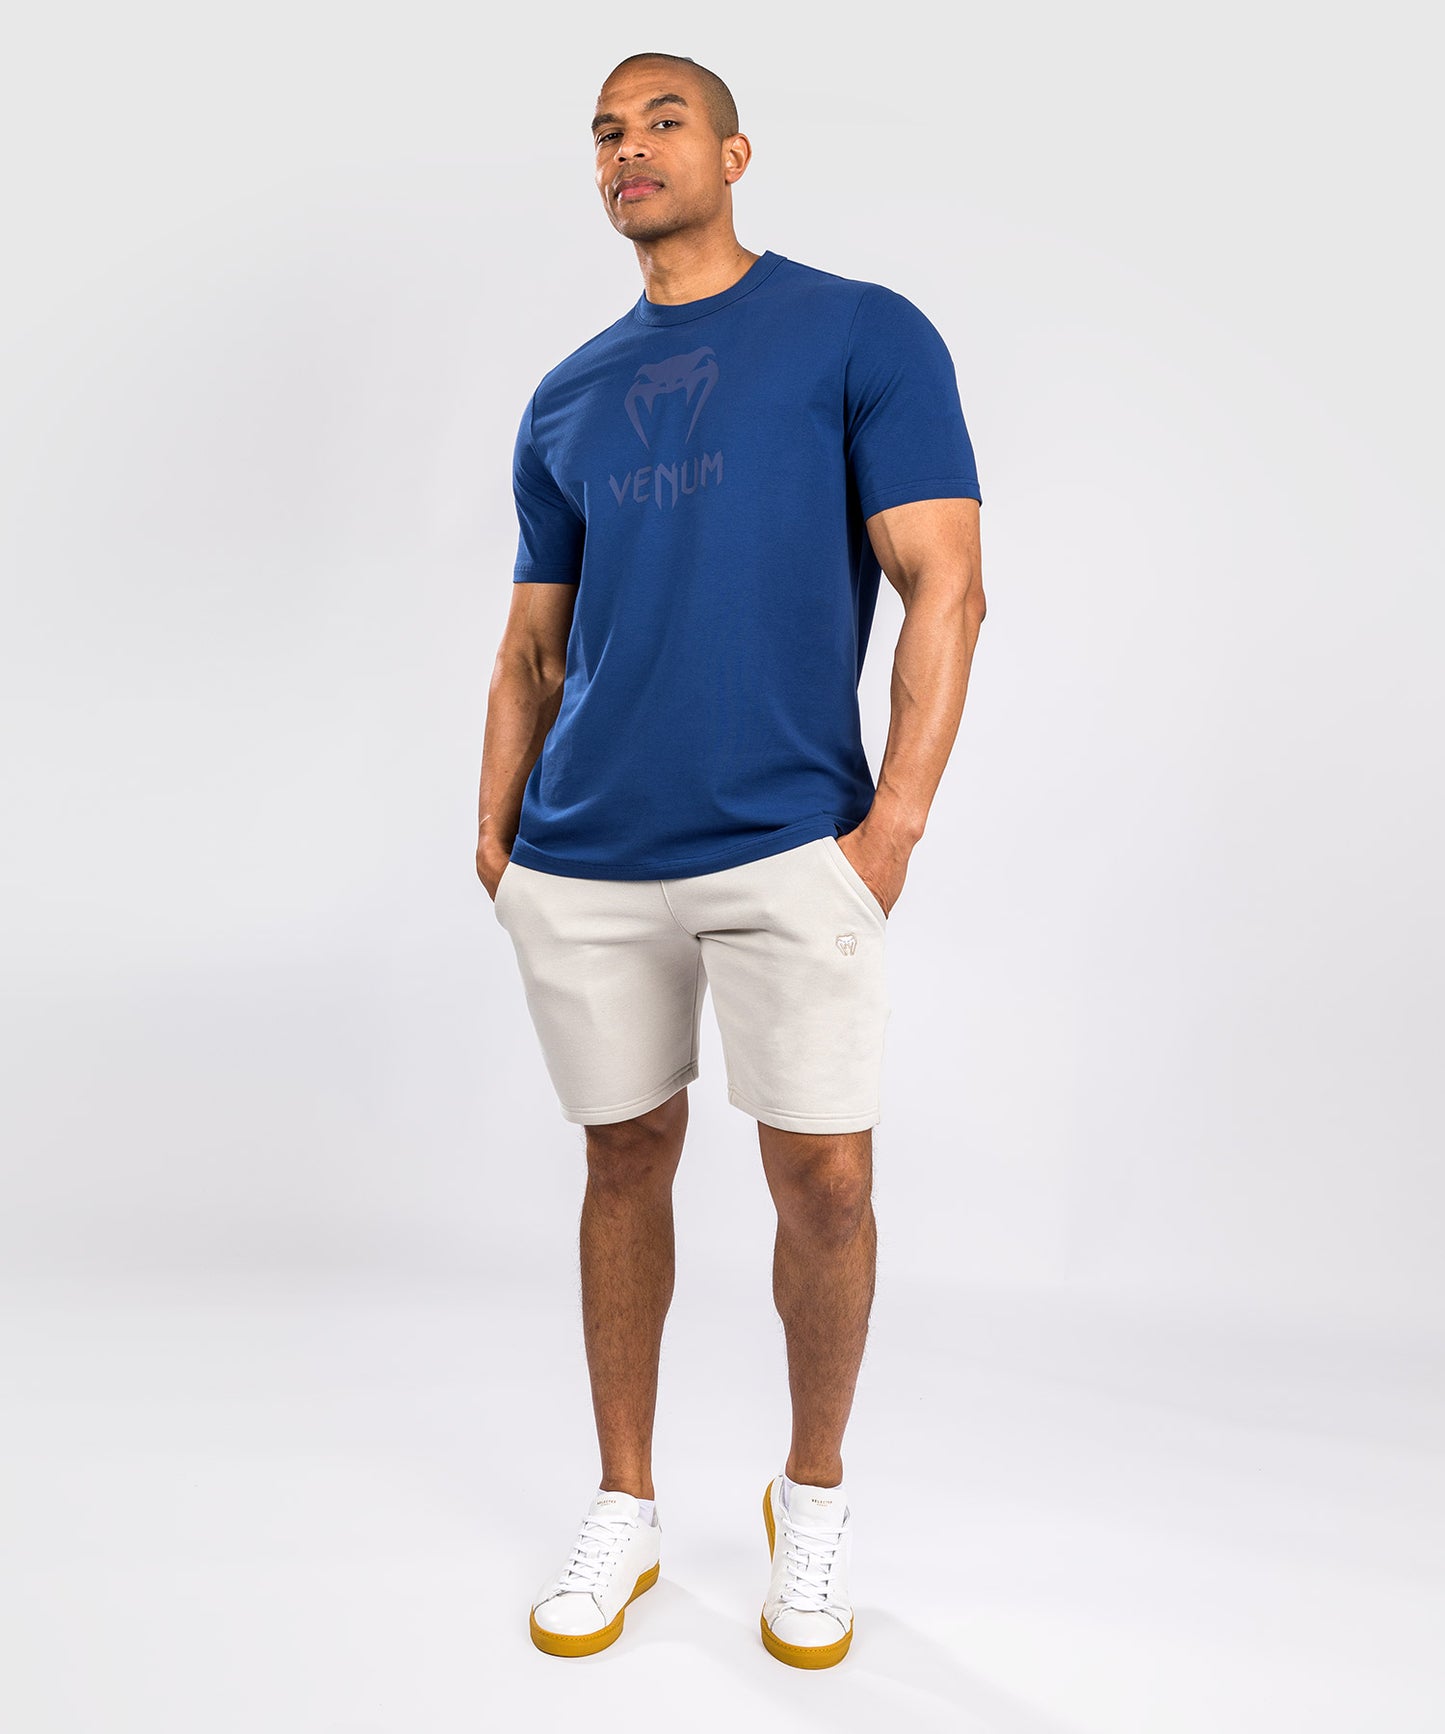 Venum Classic T-Shirt - Navy Blue/Navy Blue